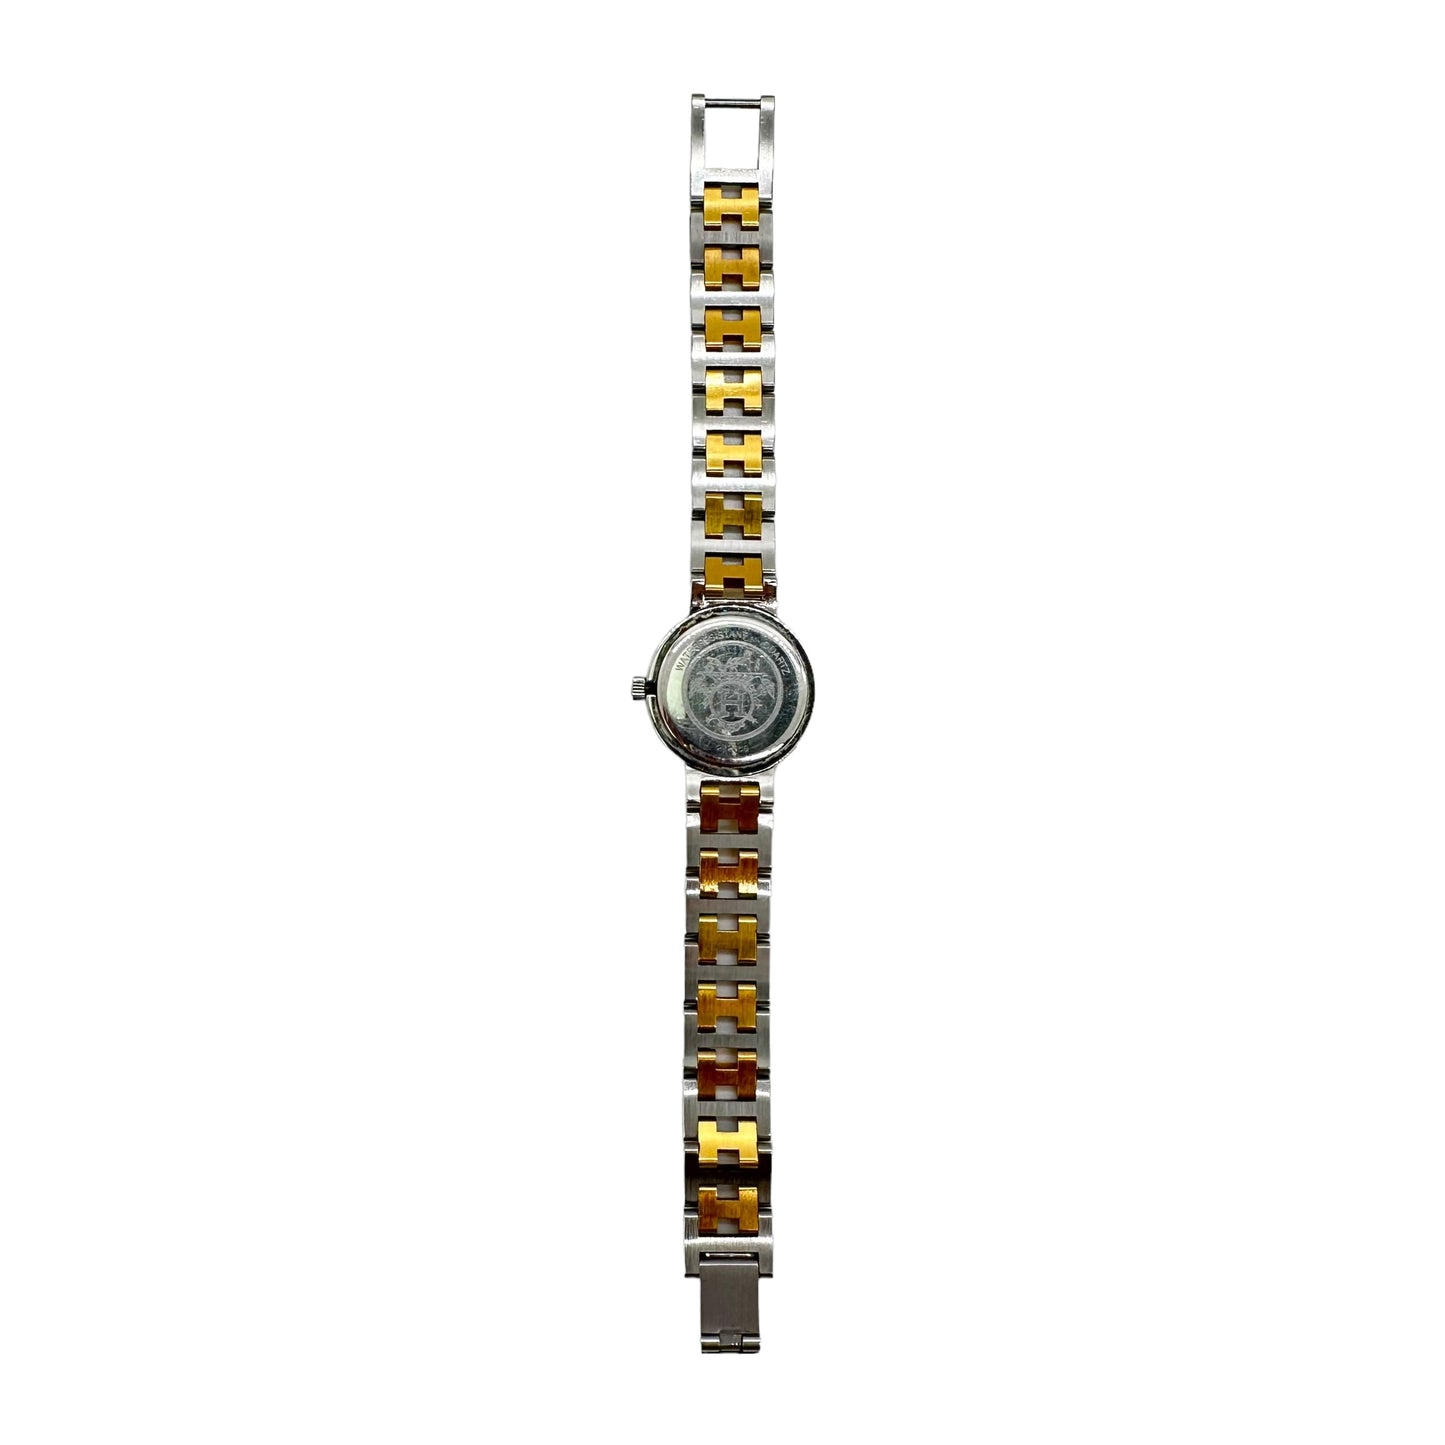 Hermes Vintage Clipper Stainless Steel Watch